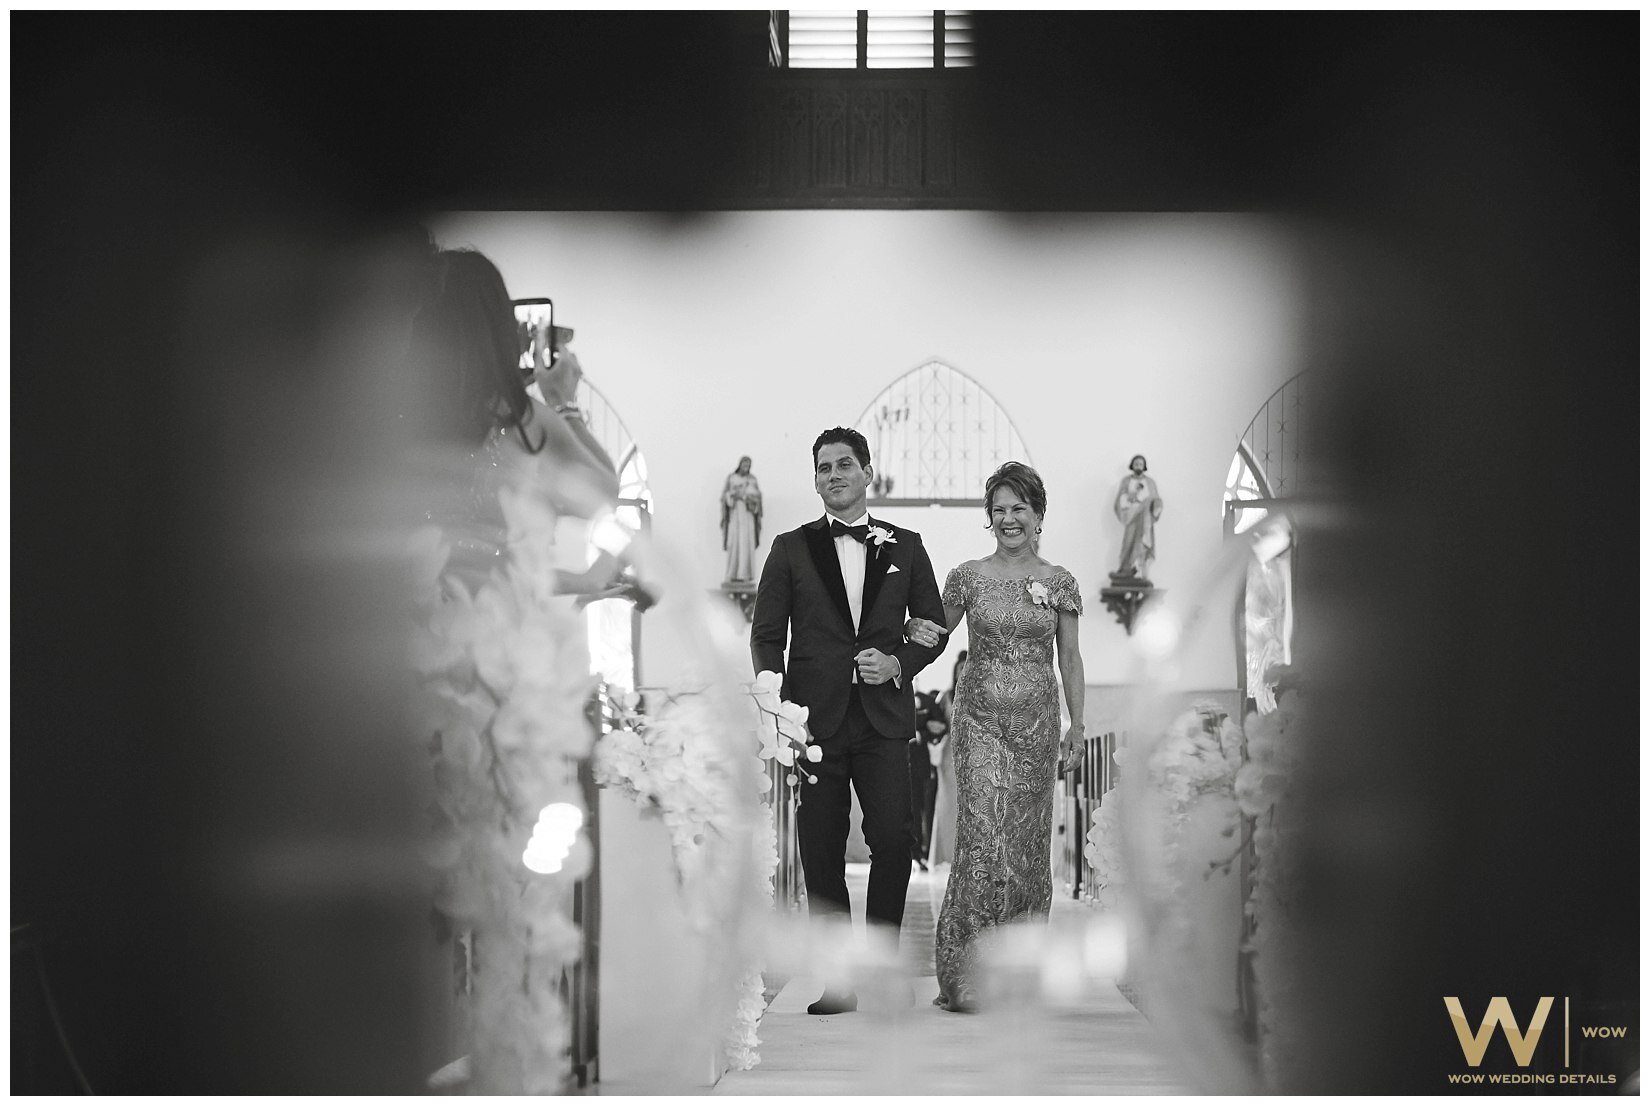 Elizabeth & Bryan - Wow Wedding Details Photography @ Landhuis Jan Thiel Curacao_0011.jpg